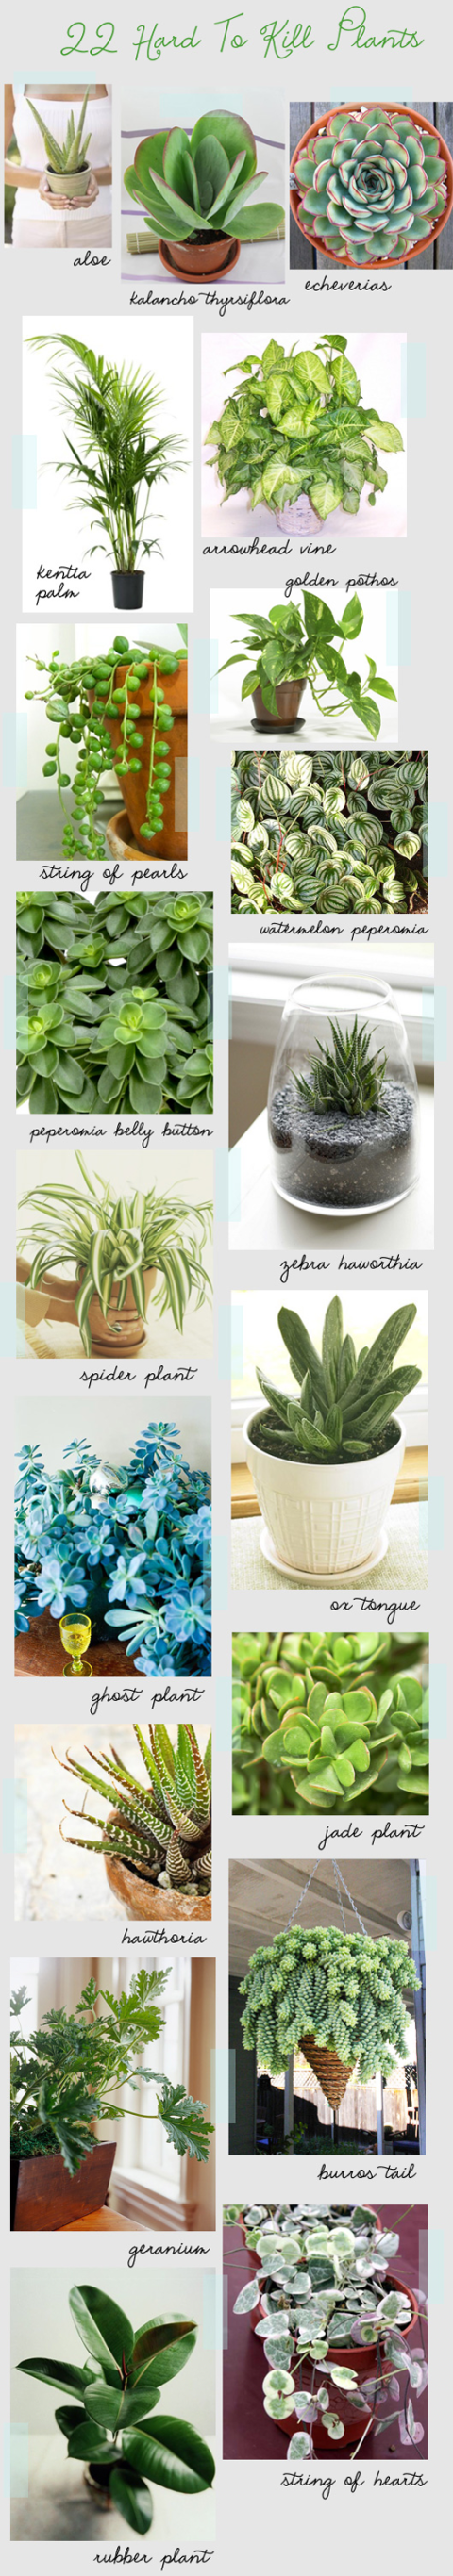 Green, Organism, Plant, Leaf, Photograph, Flowerpot, White, Botany, Terrestrial plant, Interior design, 